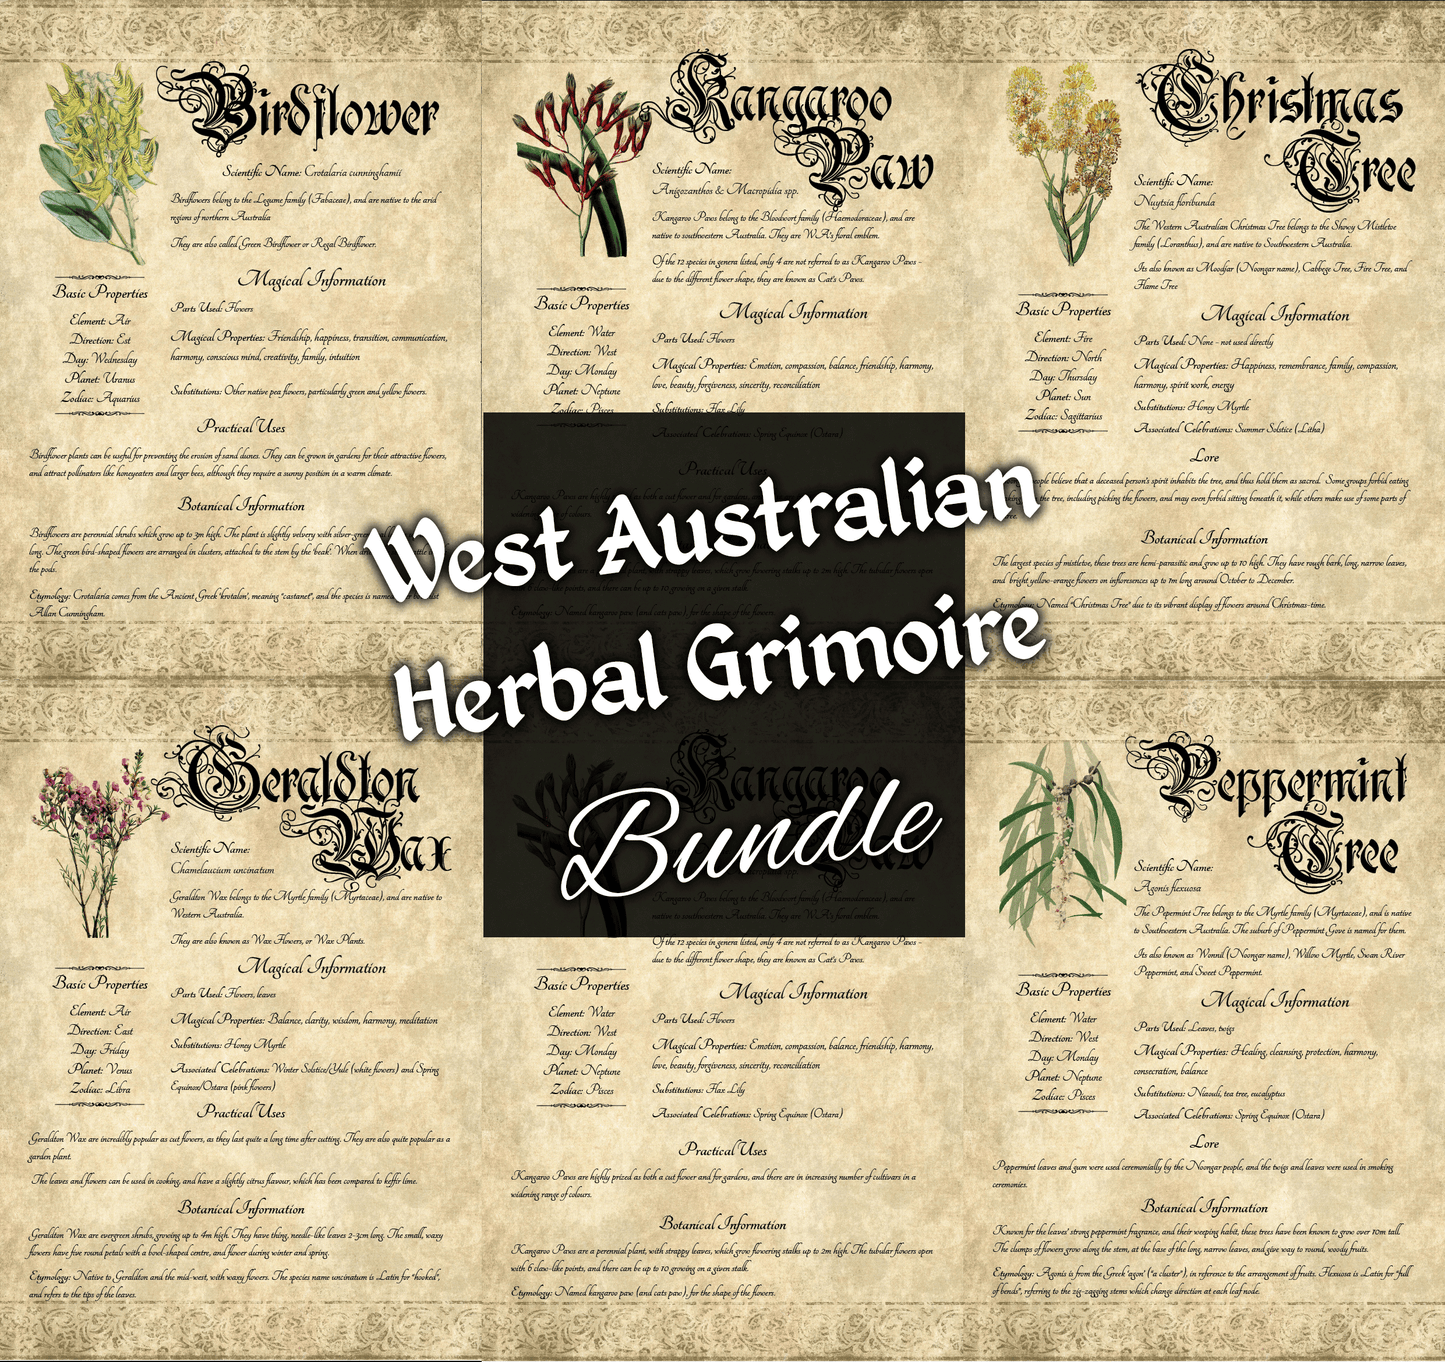 Collage of antique-style grimoire pages; central text "West Australian Herbal Grimoire Bundle"